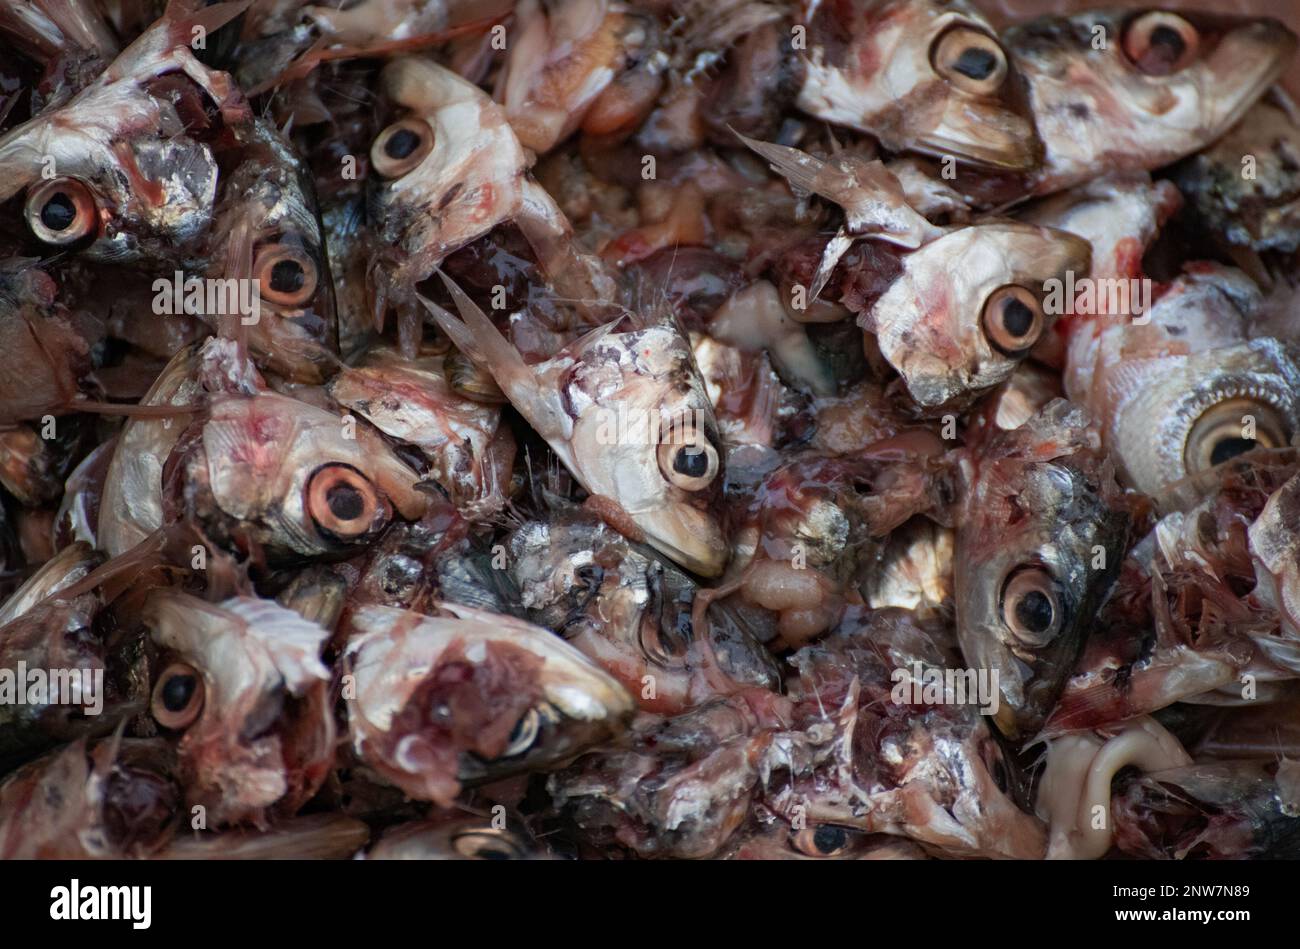 sardine heads Stock Photo